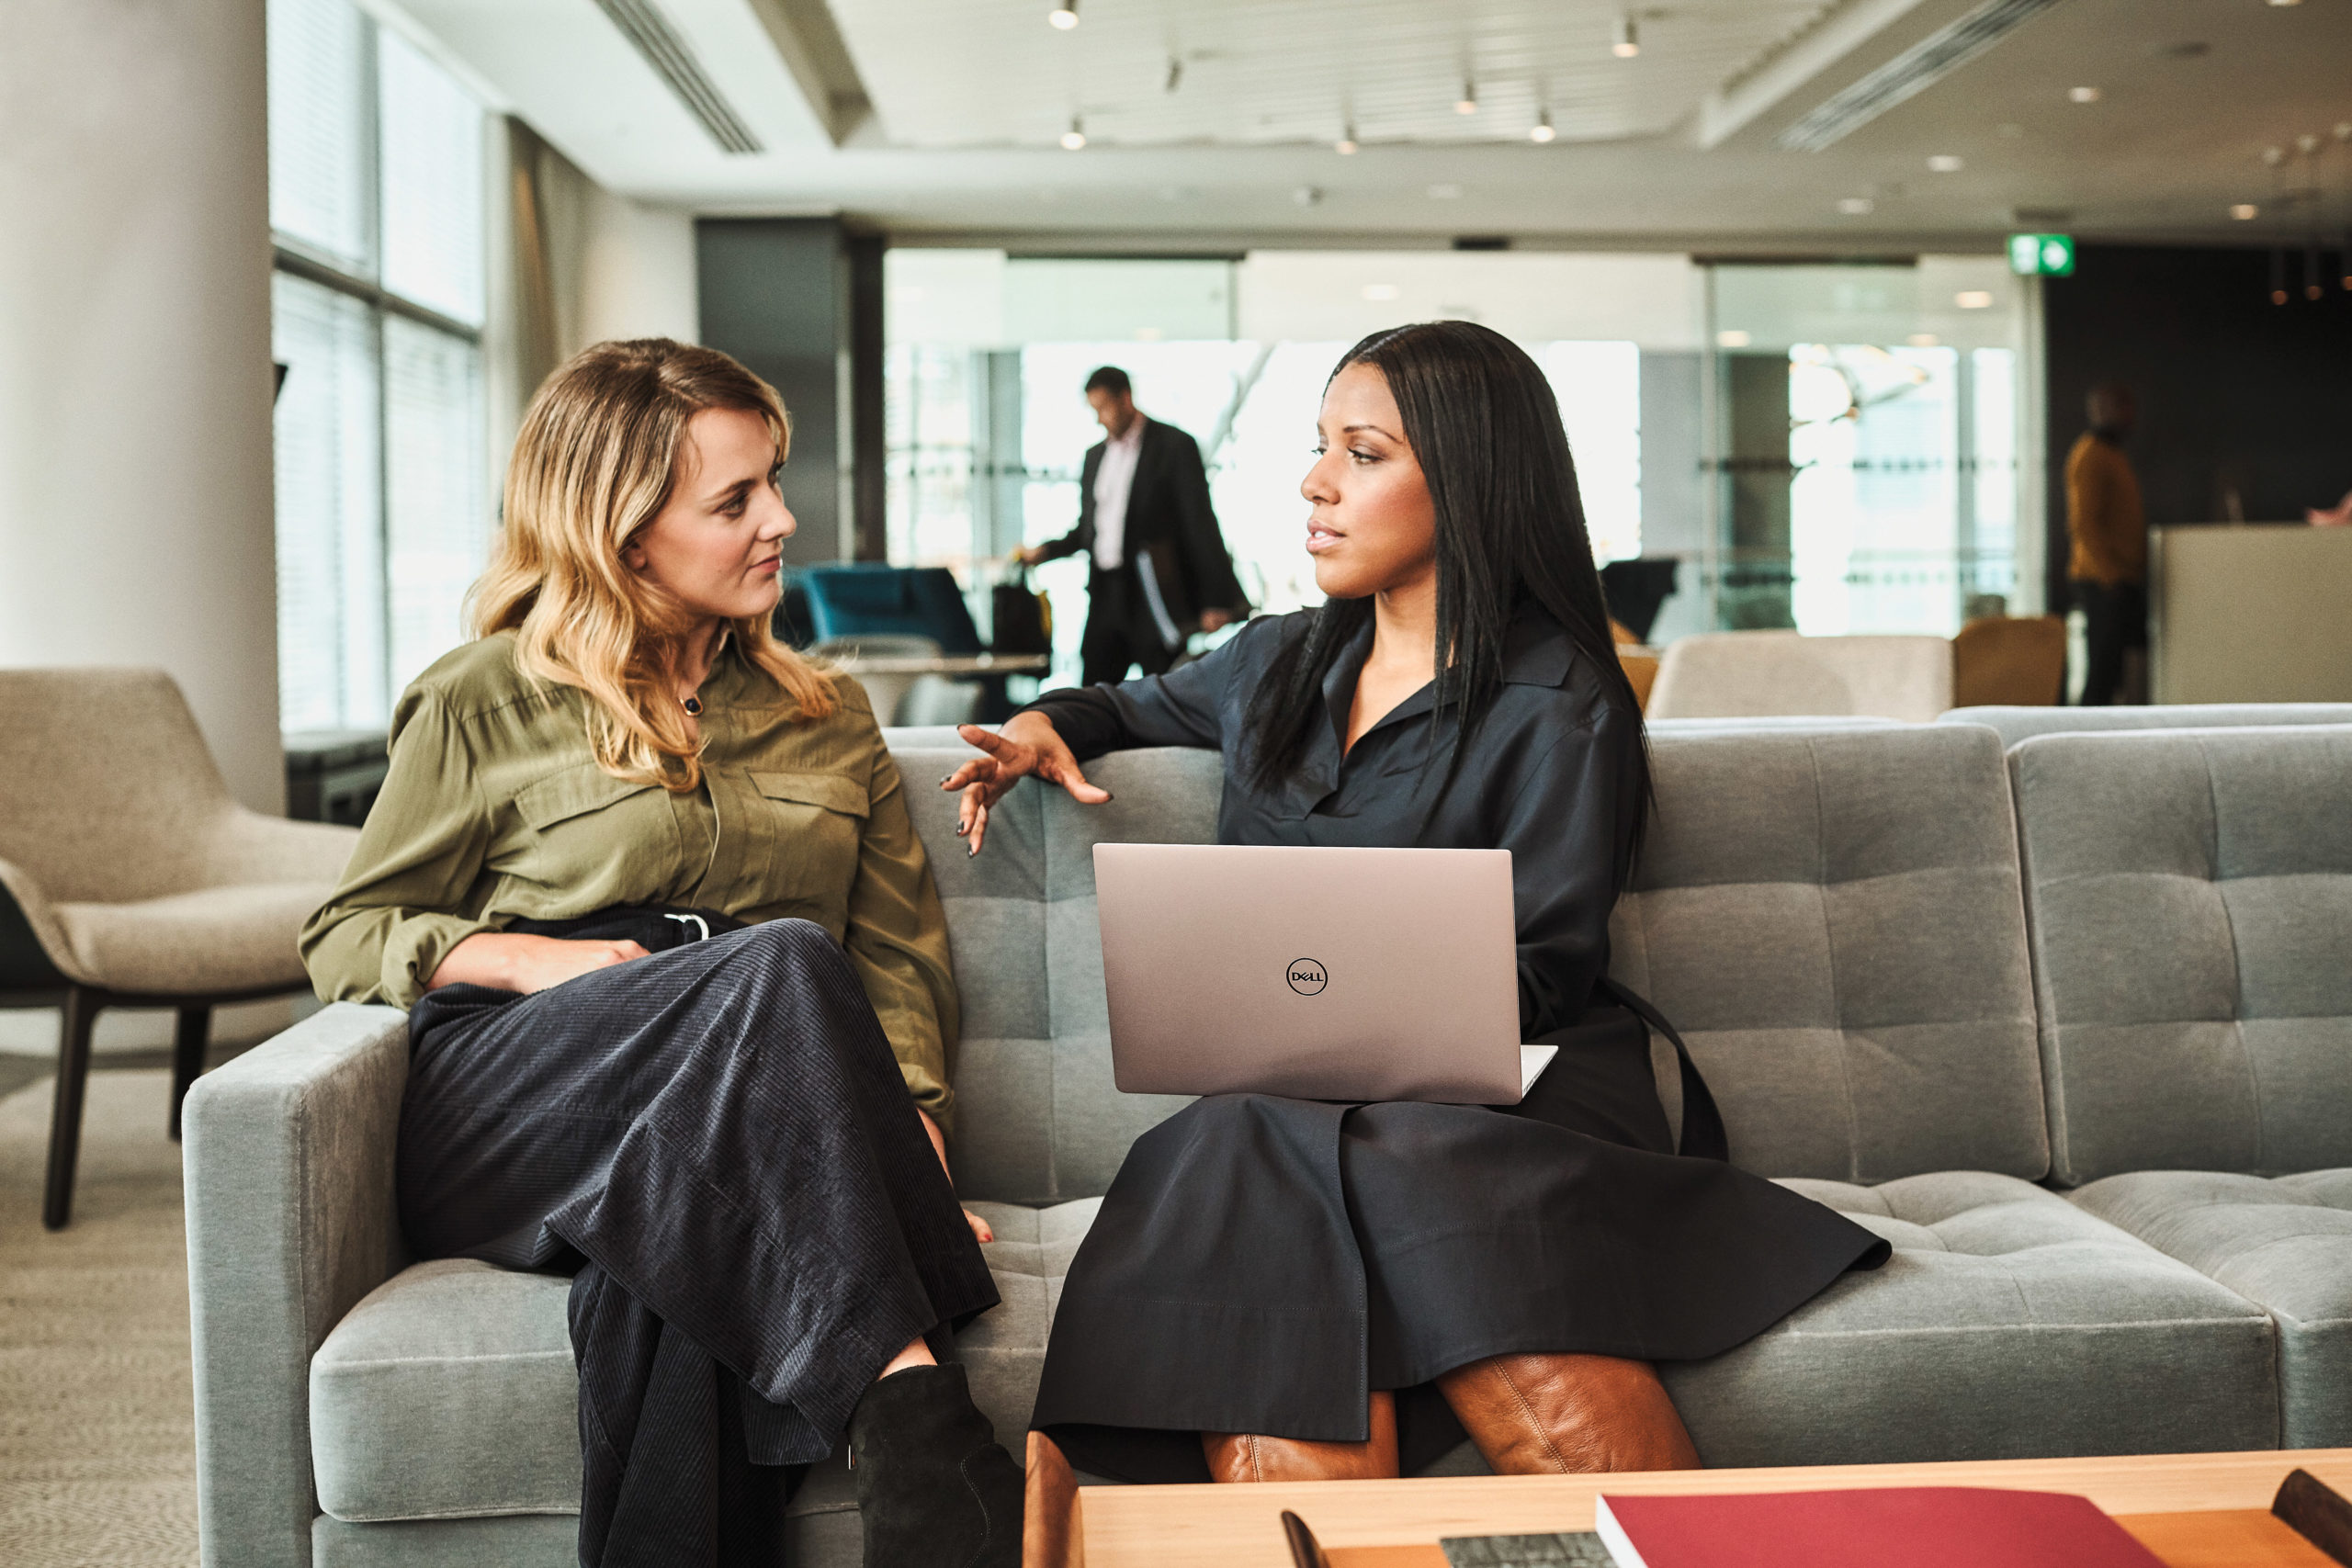 Two women conversing in an office setting